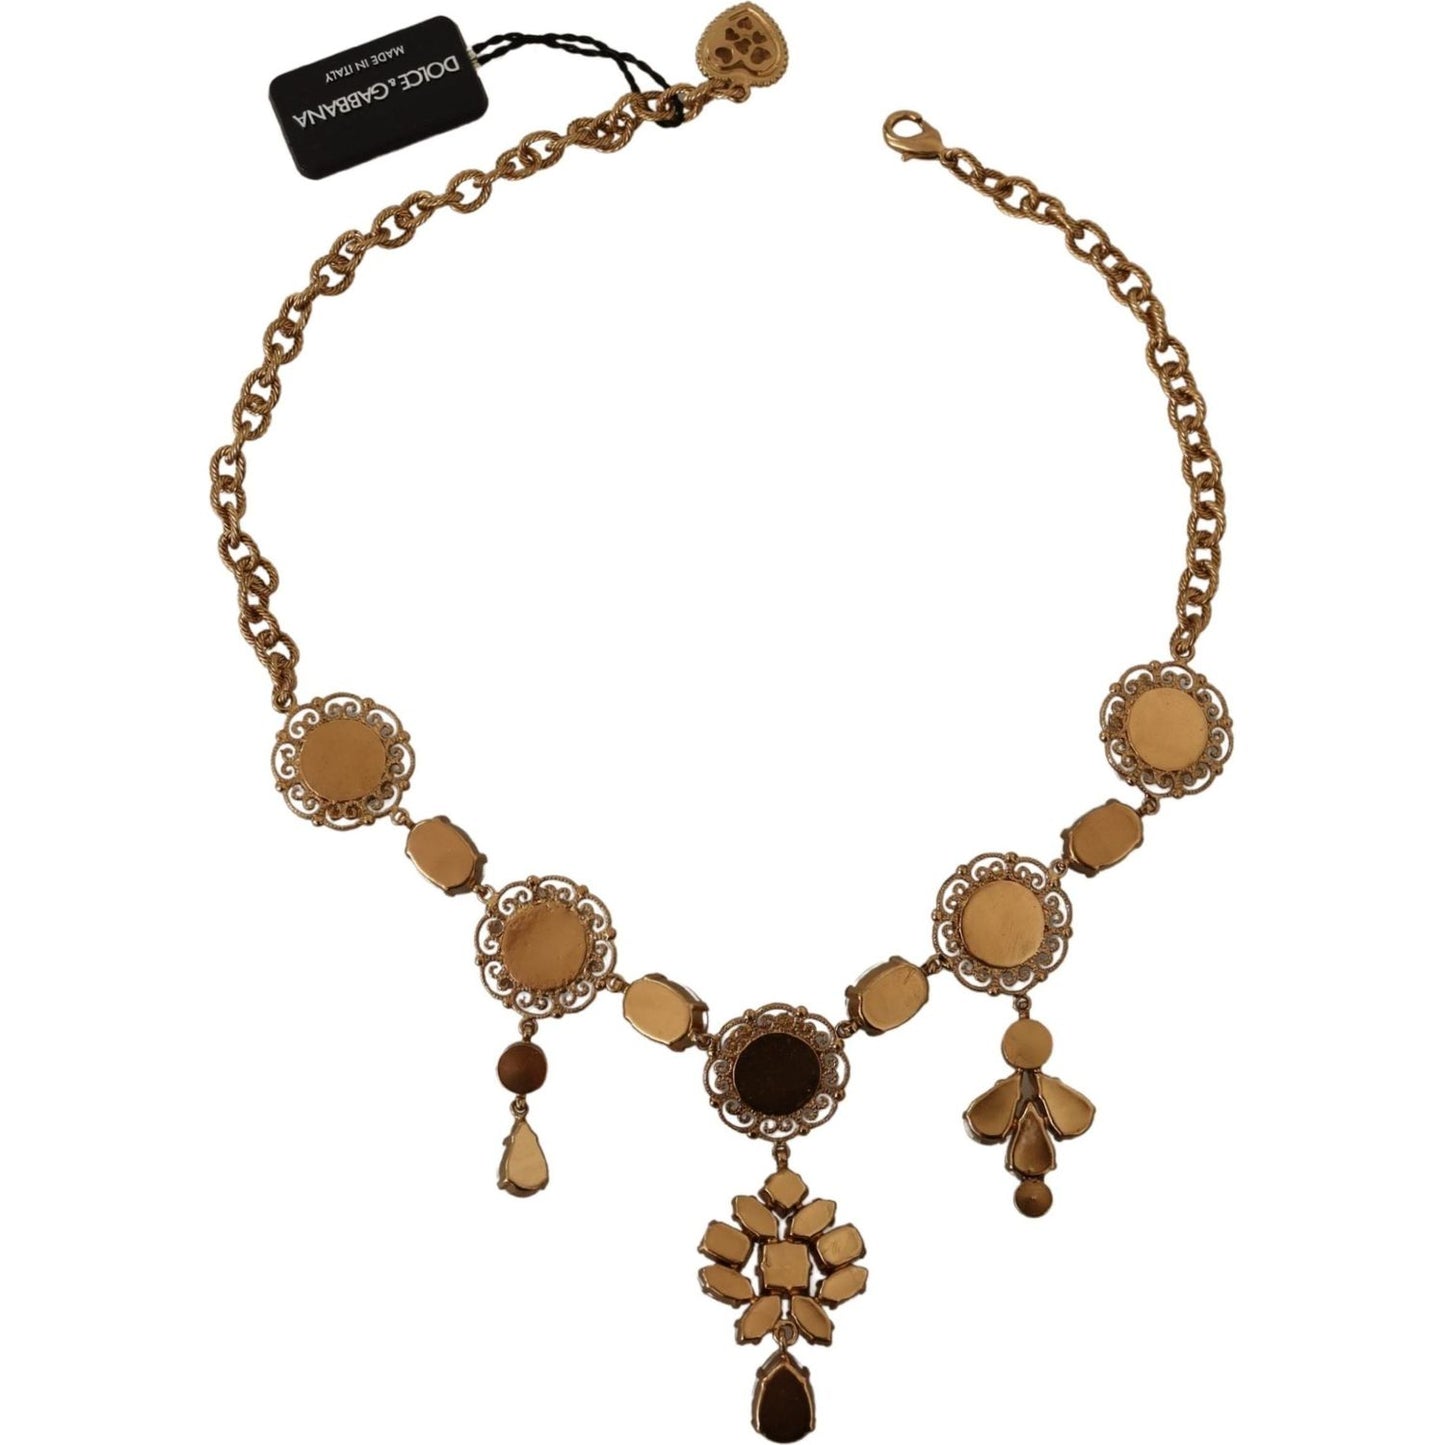 Dolce & Gabbana Elegant Floral Statement Necklace WOMAN NECKLACE gold-brass-floral-sicily-charms-statement-necklace